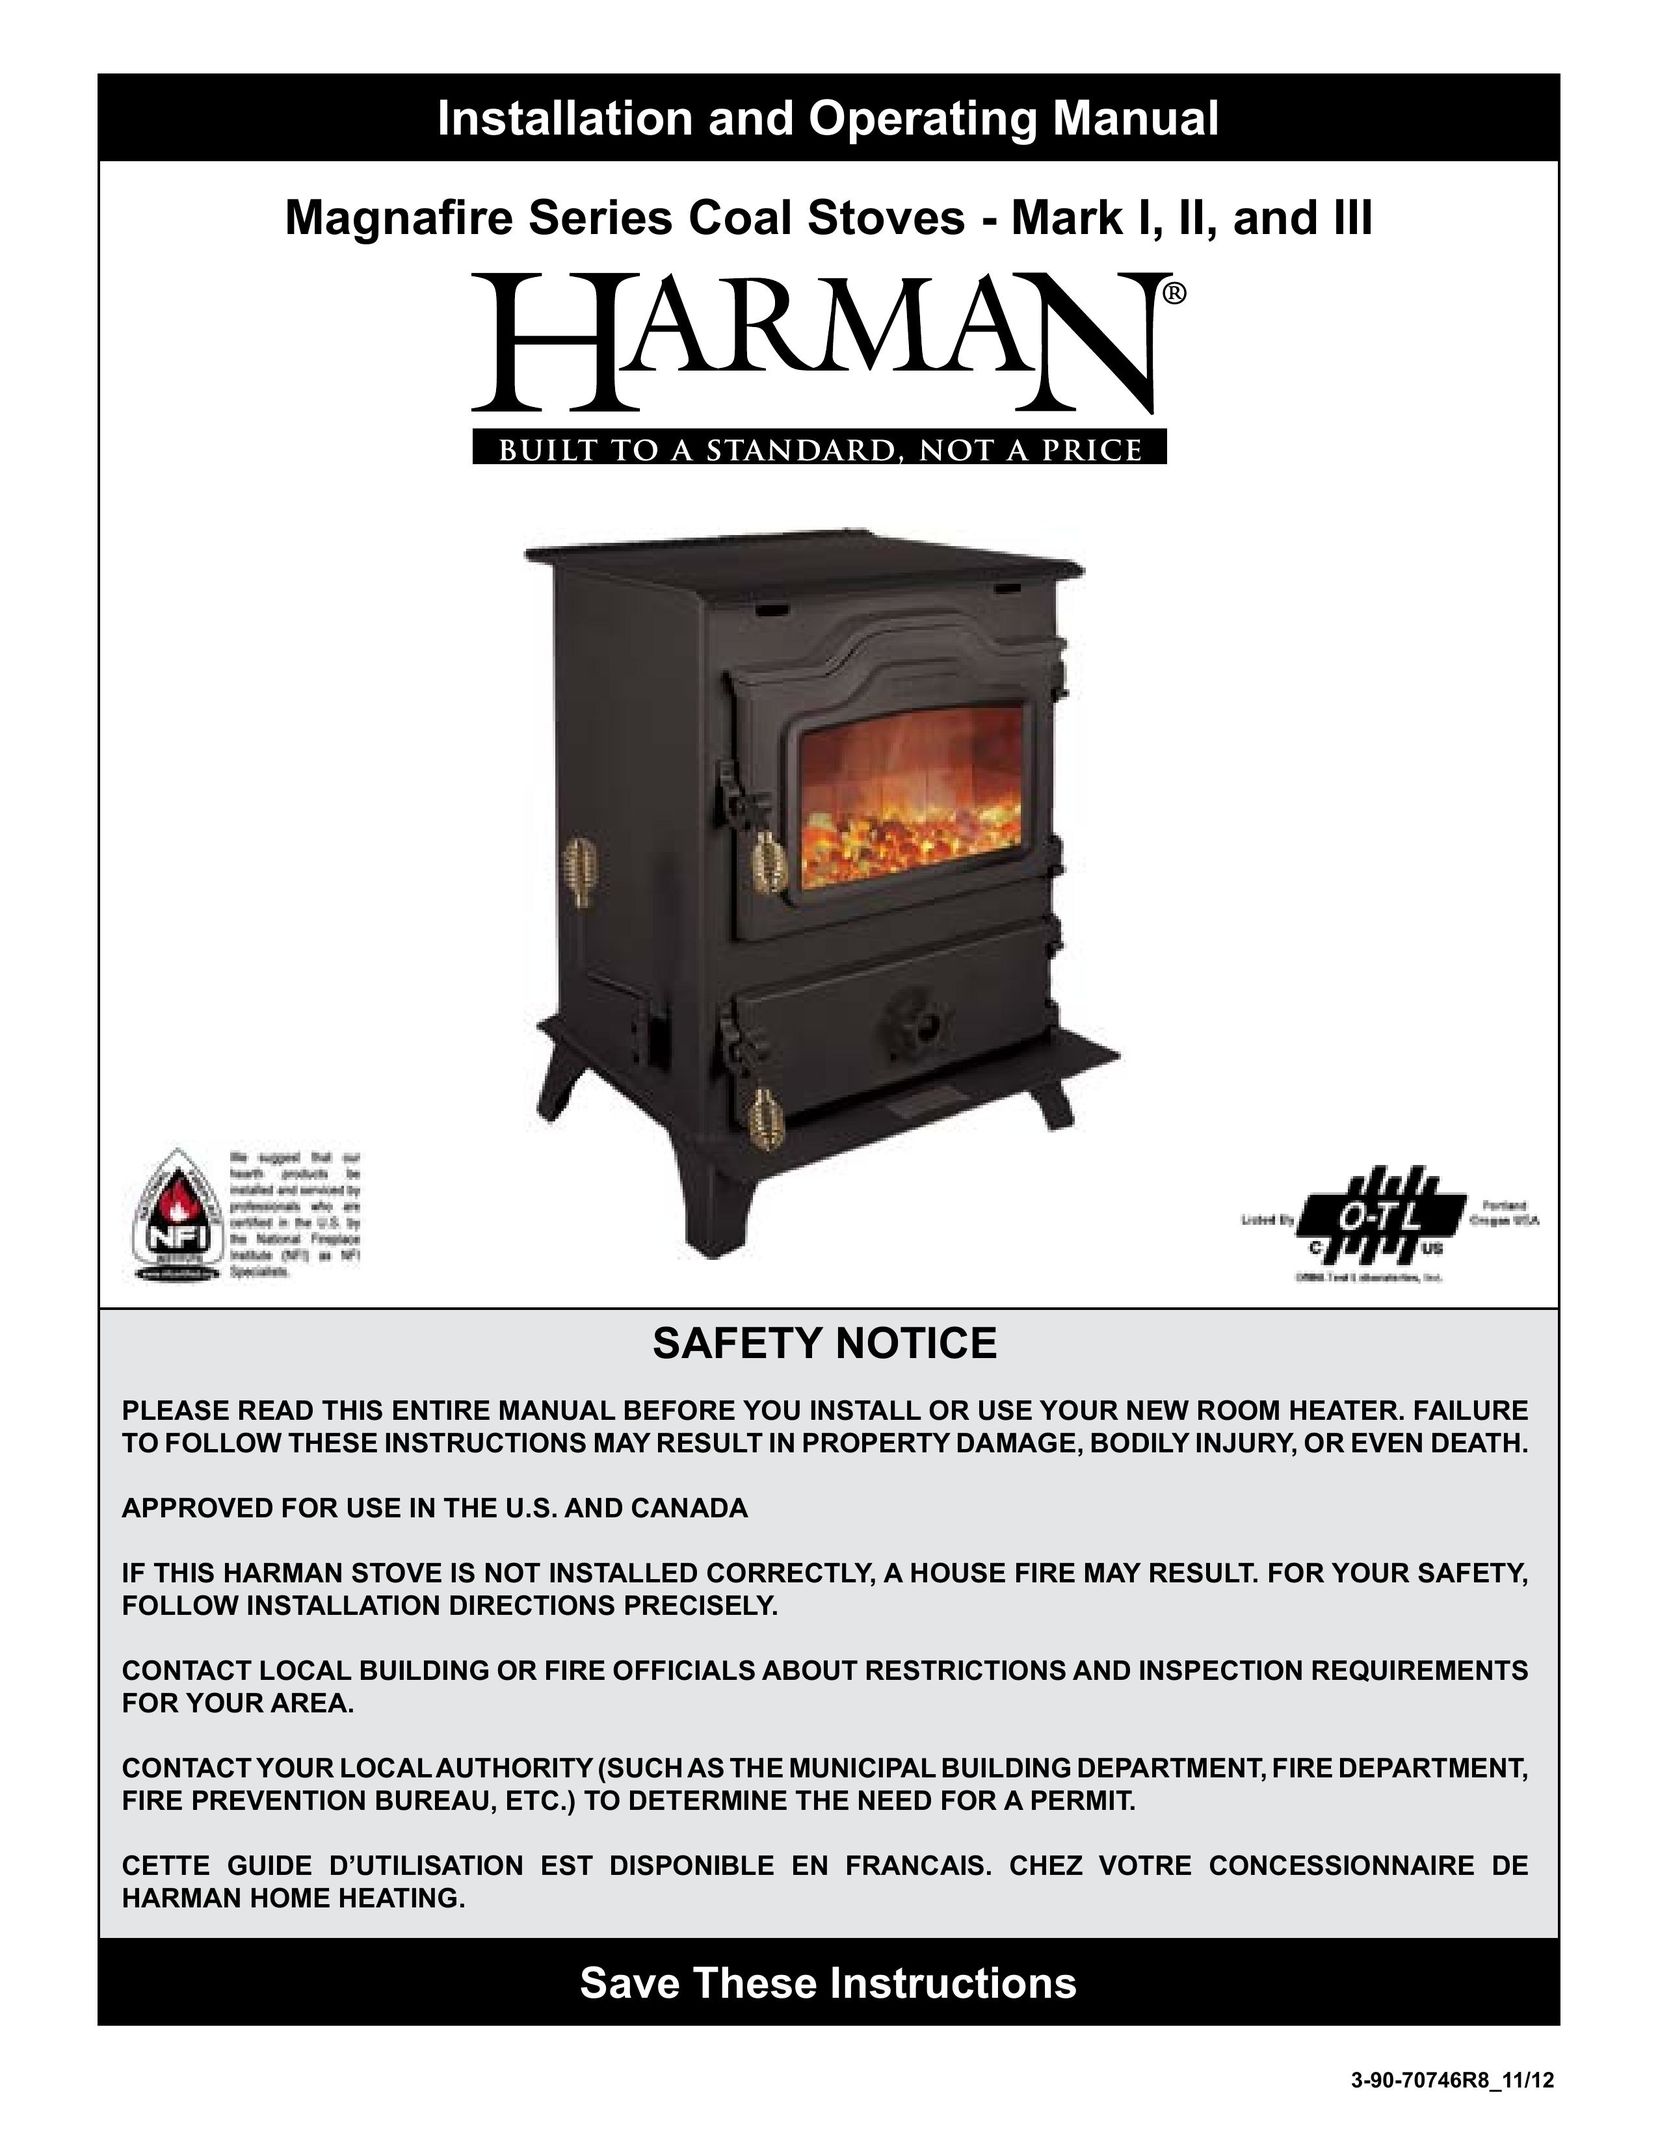 Harman Stove Company Mark II Oven User Manual